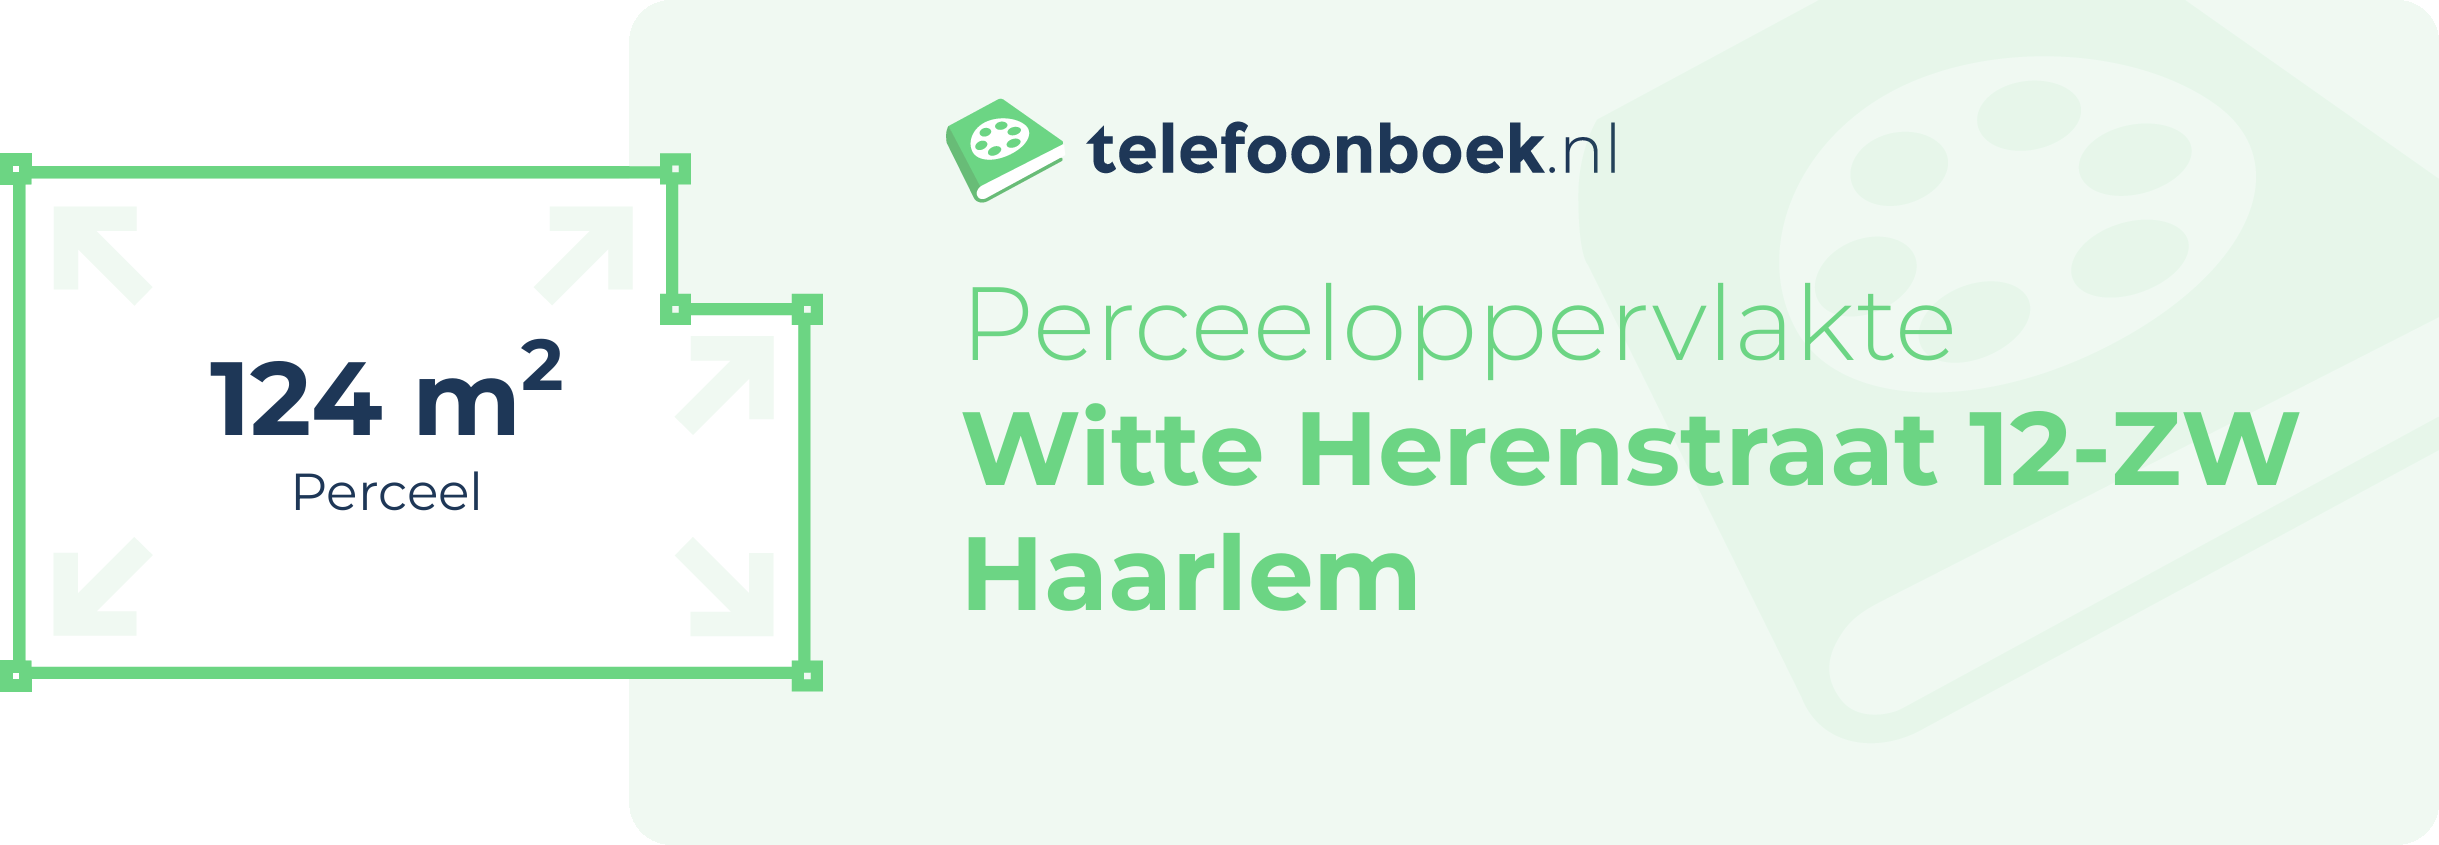 Perceeloppervlakte Witte Herenstraat 12-ZW Haarlem